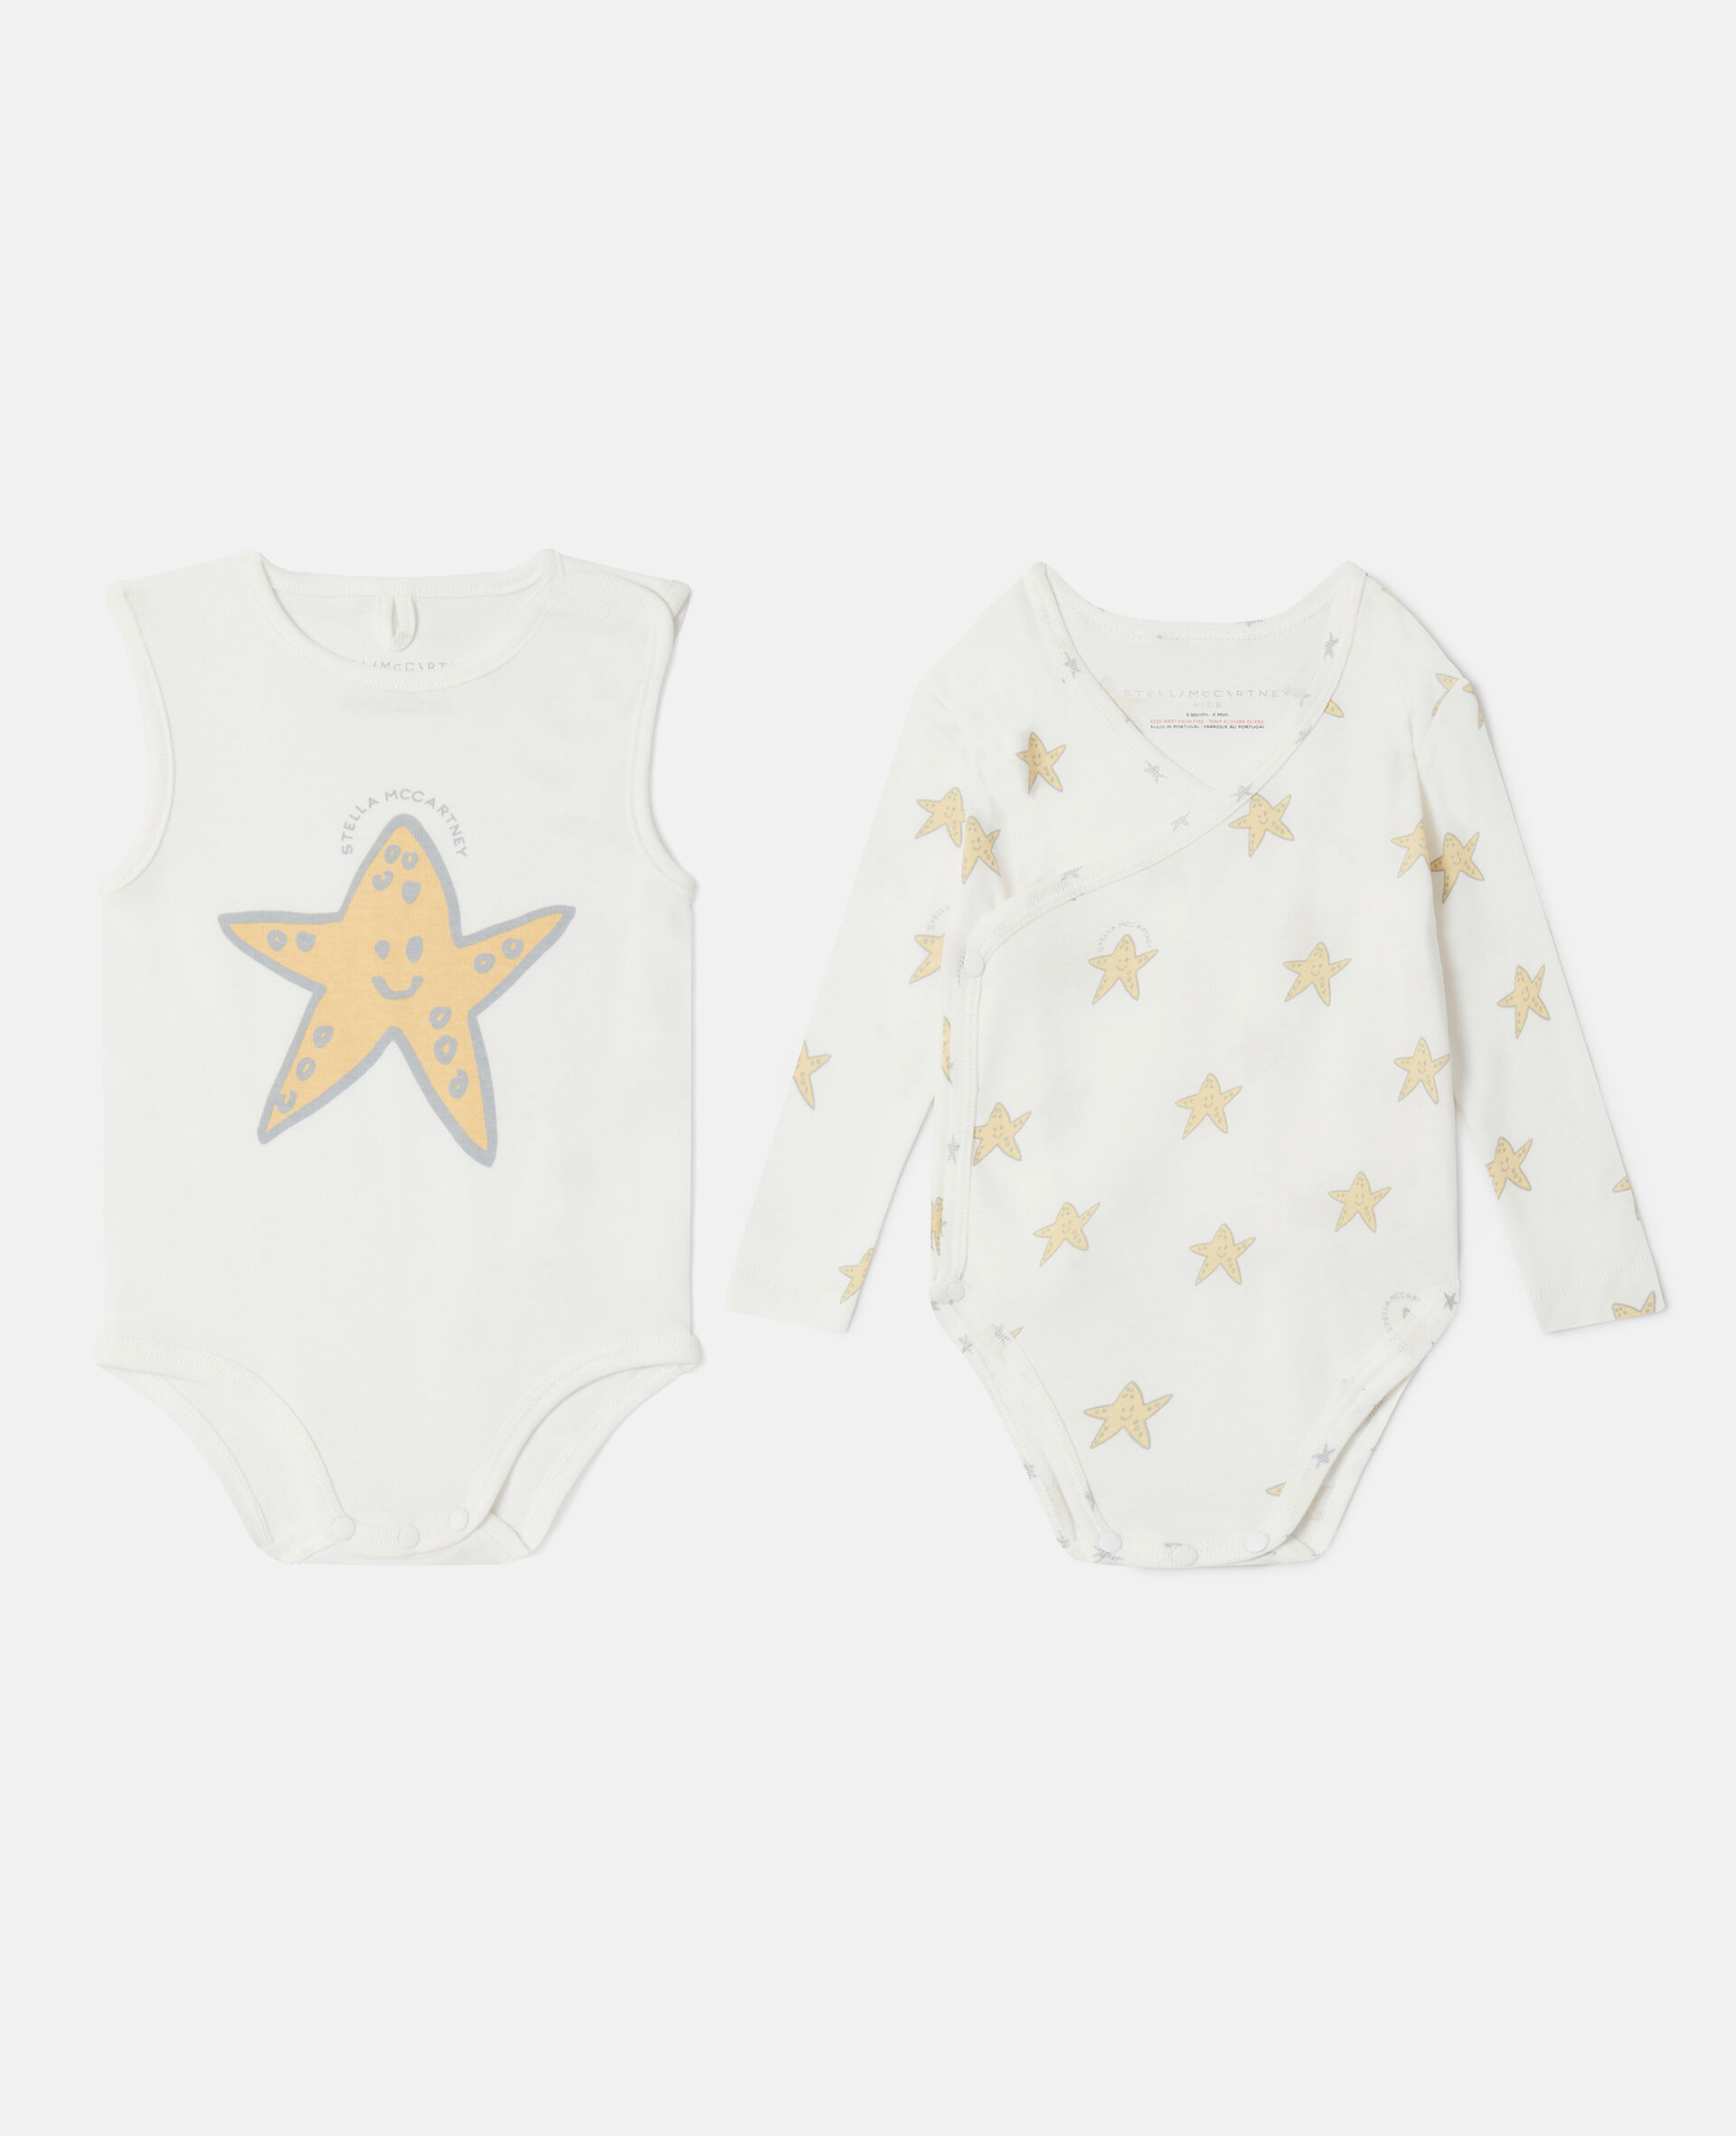 Smiling Stella Star Print Bodysuit and Sleepsuit Set-Multicolored-large image number 0